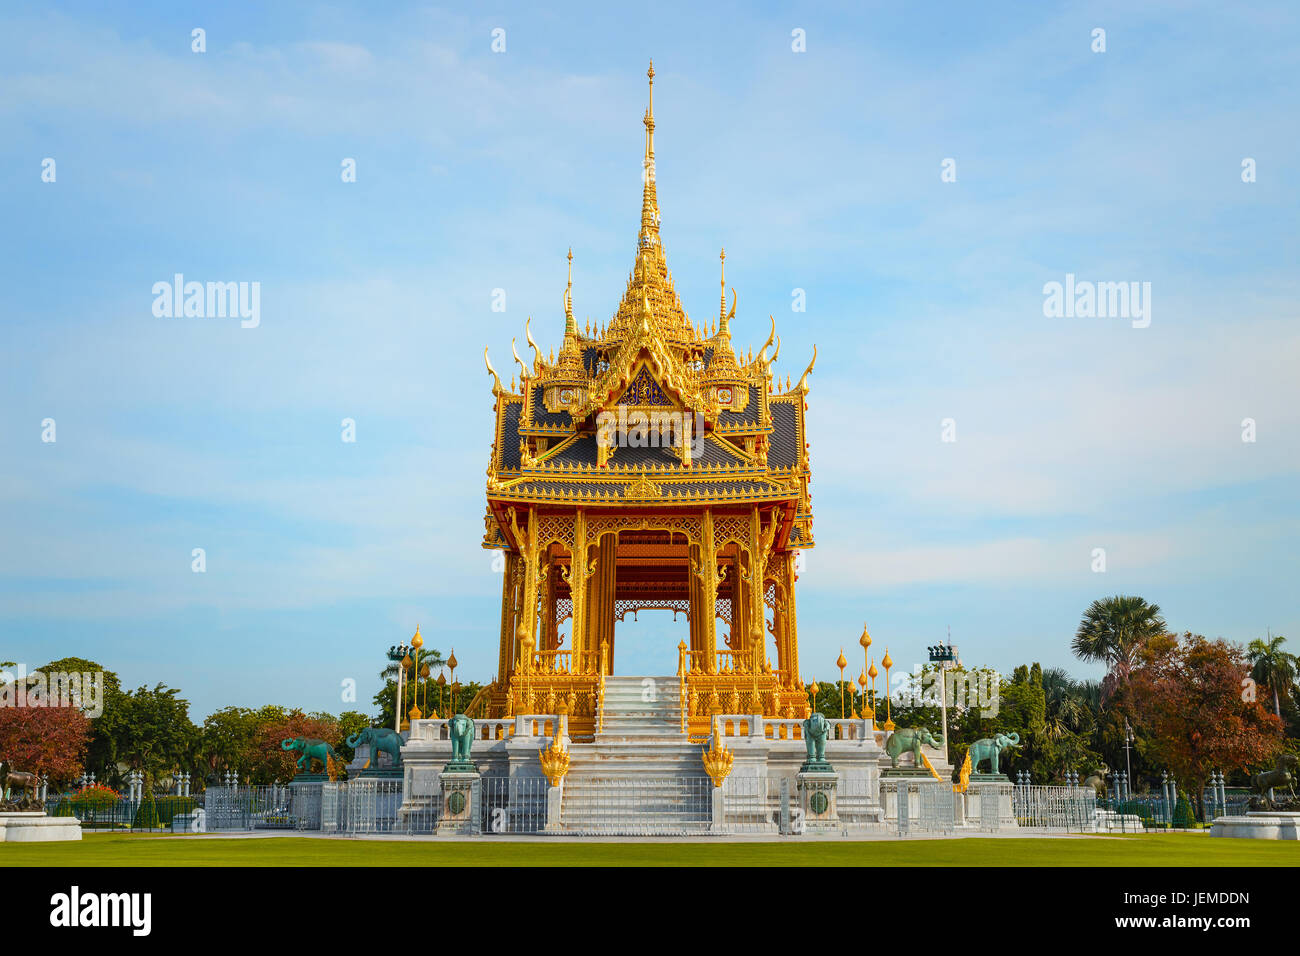 Ananta Samakhom Throne Hall with Barom Mangalanusarani Pavilion at the Royal Dusit Palace in Bangkok, Thailand Stock Photo